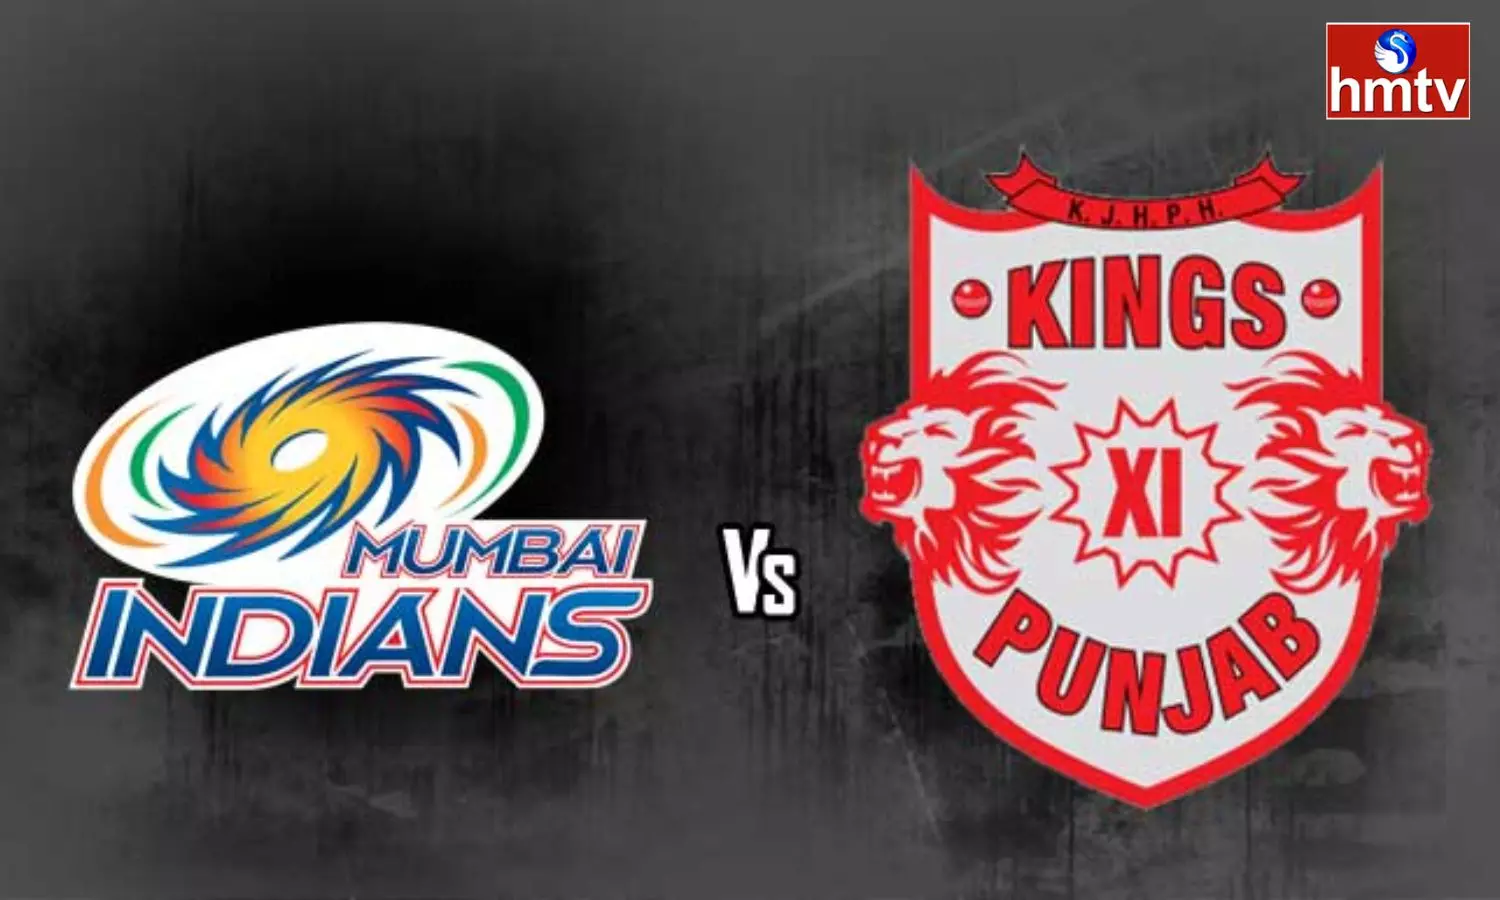 Mumbai Indians Win Over Punjab Kings In IPL